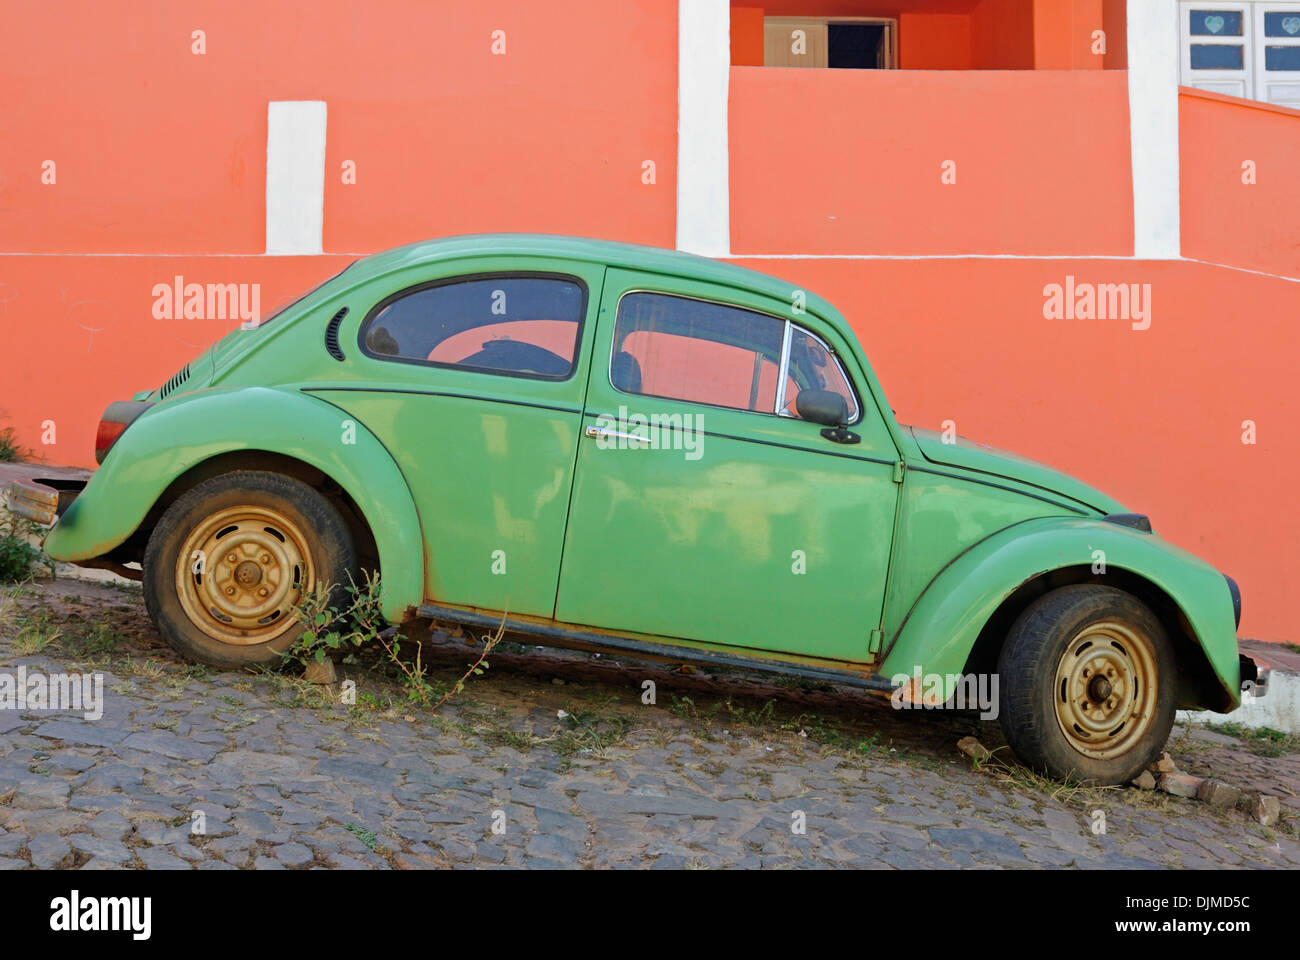 Brazil, Bahia, Lencois: Old historic Volkswagen Beetle parked in one of Lencois' cobblestone roads. Stock Photo